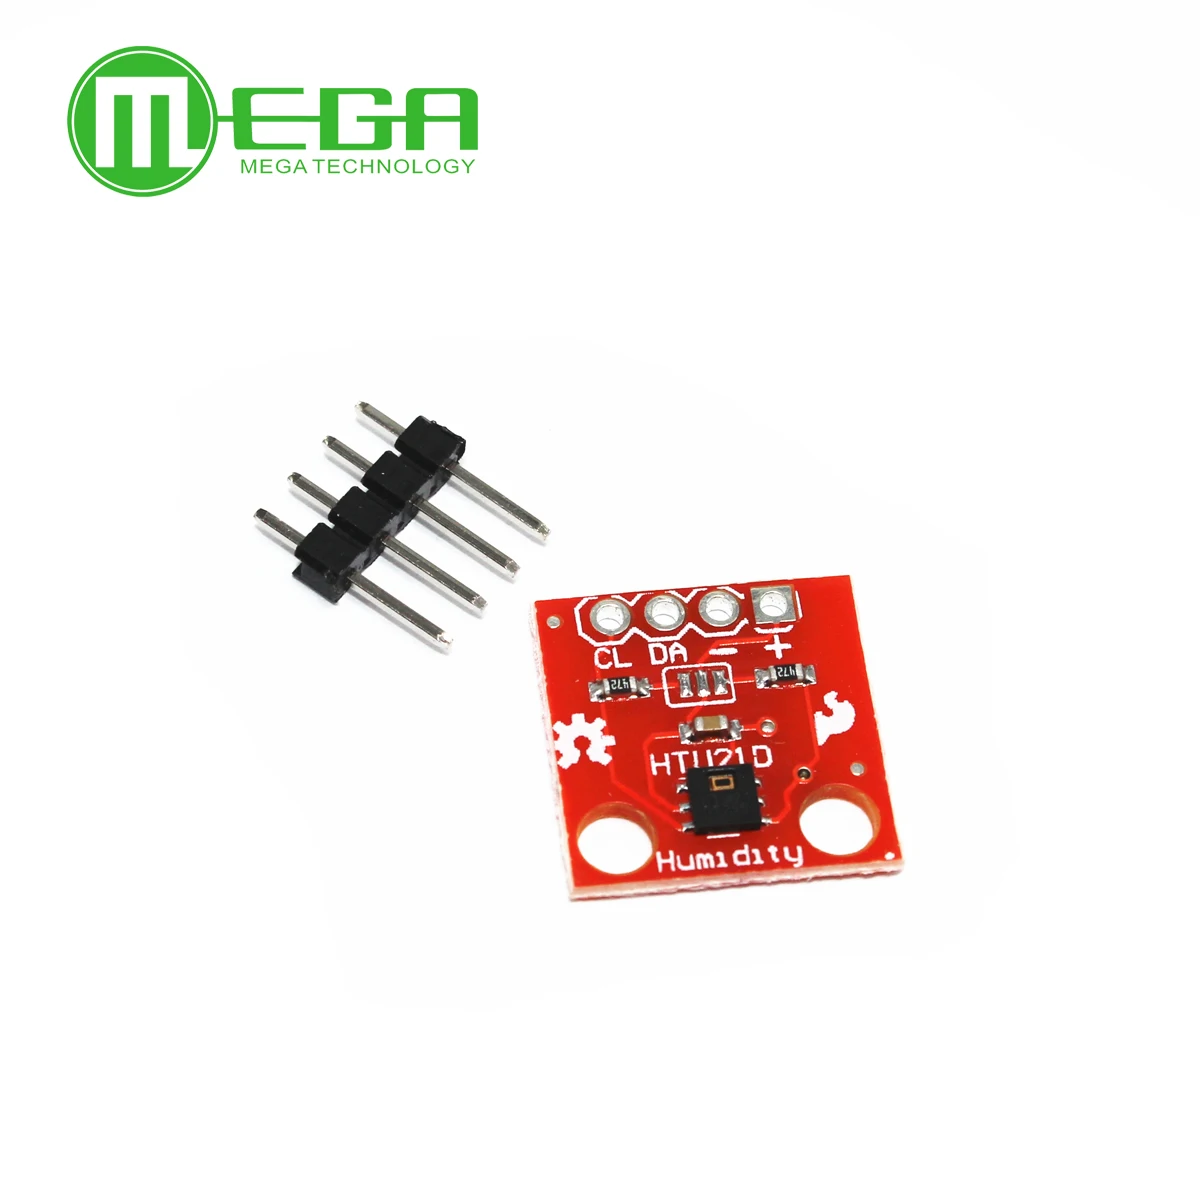 10PCS HTU21D Sensor Module Temperature & Humidity Breakout Board For Arduino 